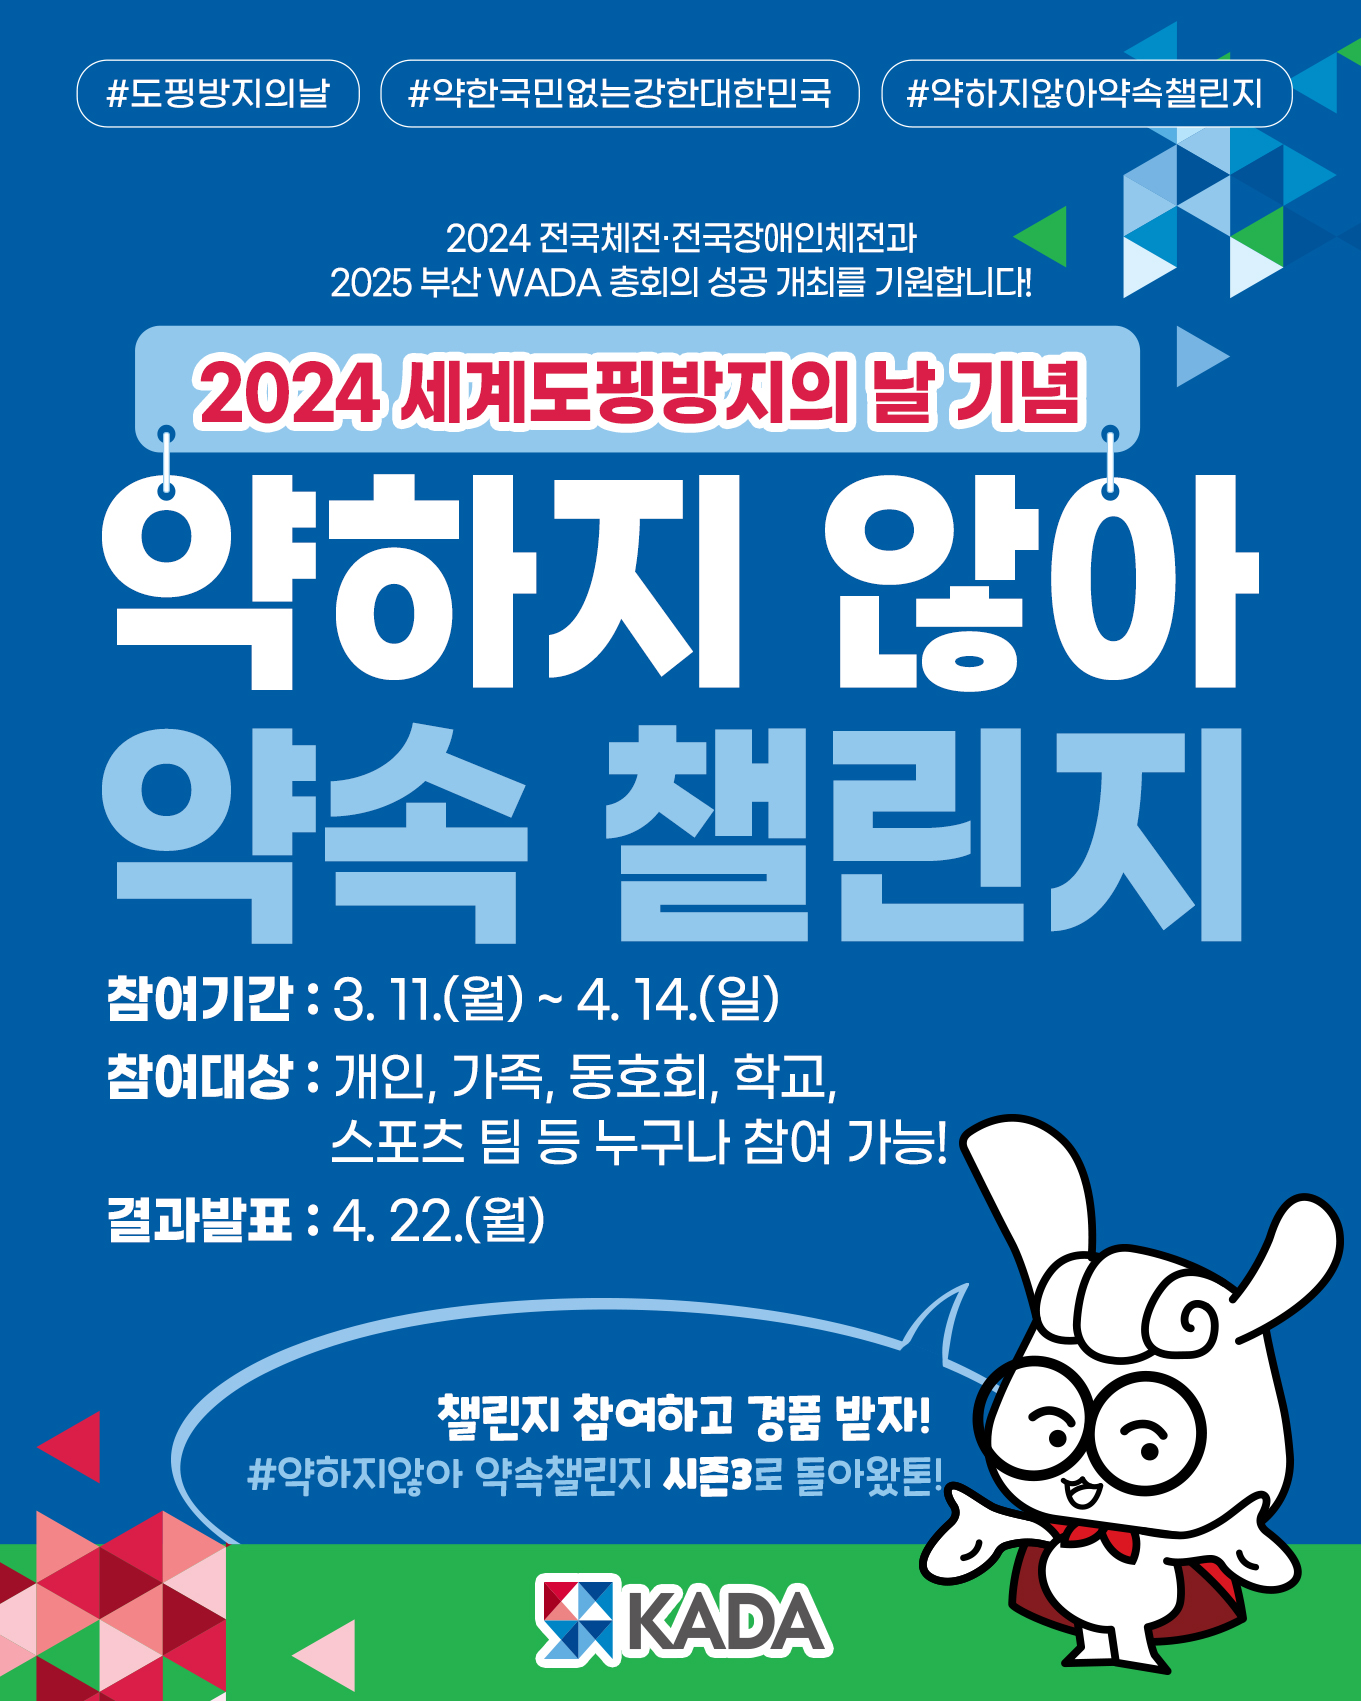 KOREA ANTI-DOPING AGENCY 한국도핑방지위원회 도핑예방 보건의료 전문가 과정(KADAMP)Korea Anti-Doping Academy fo Medical Professional 접수 홈페이지 바로가기(http://kadamp.hubst.co.kr).